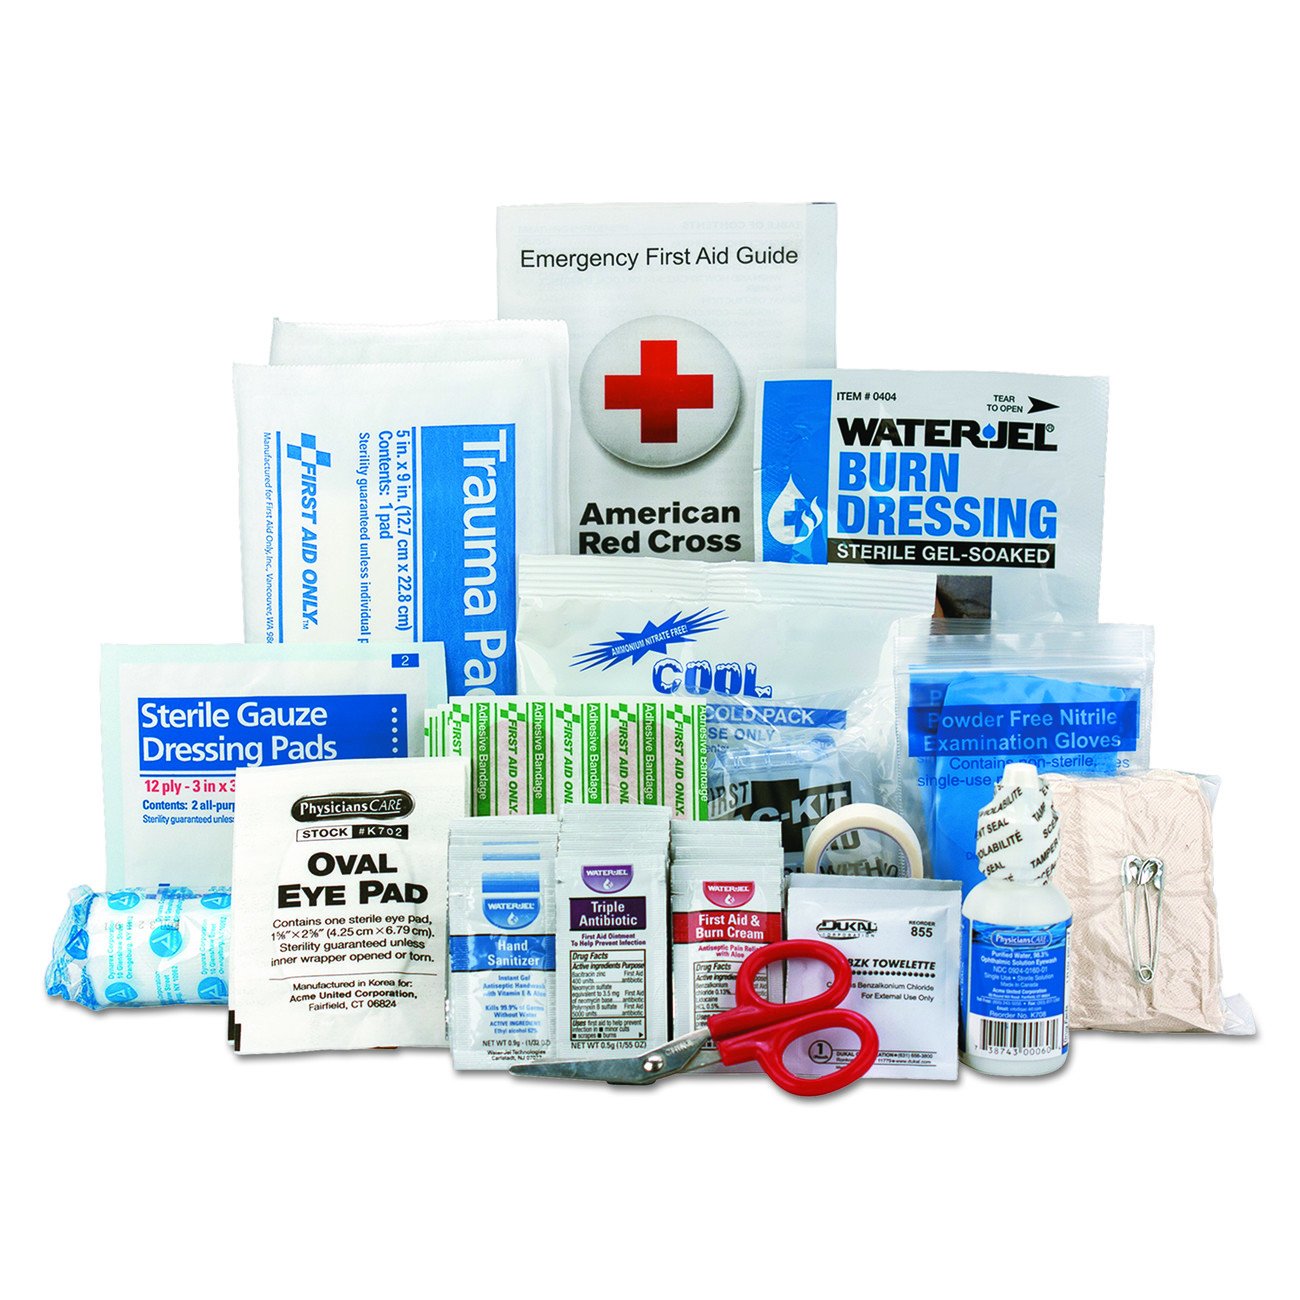 ANSI First Aid Kit Refill item #90583